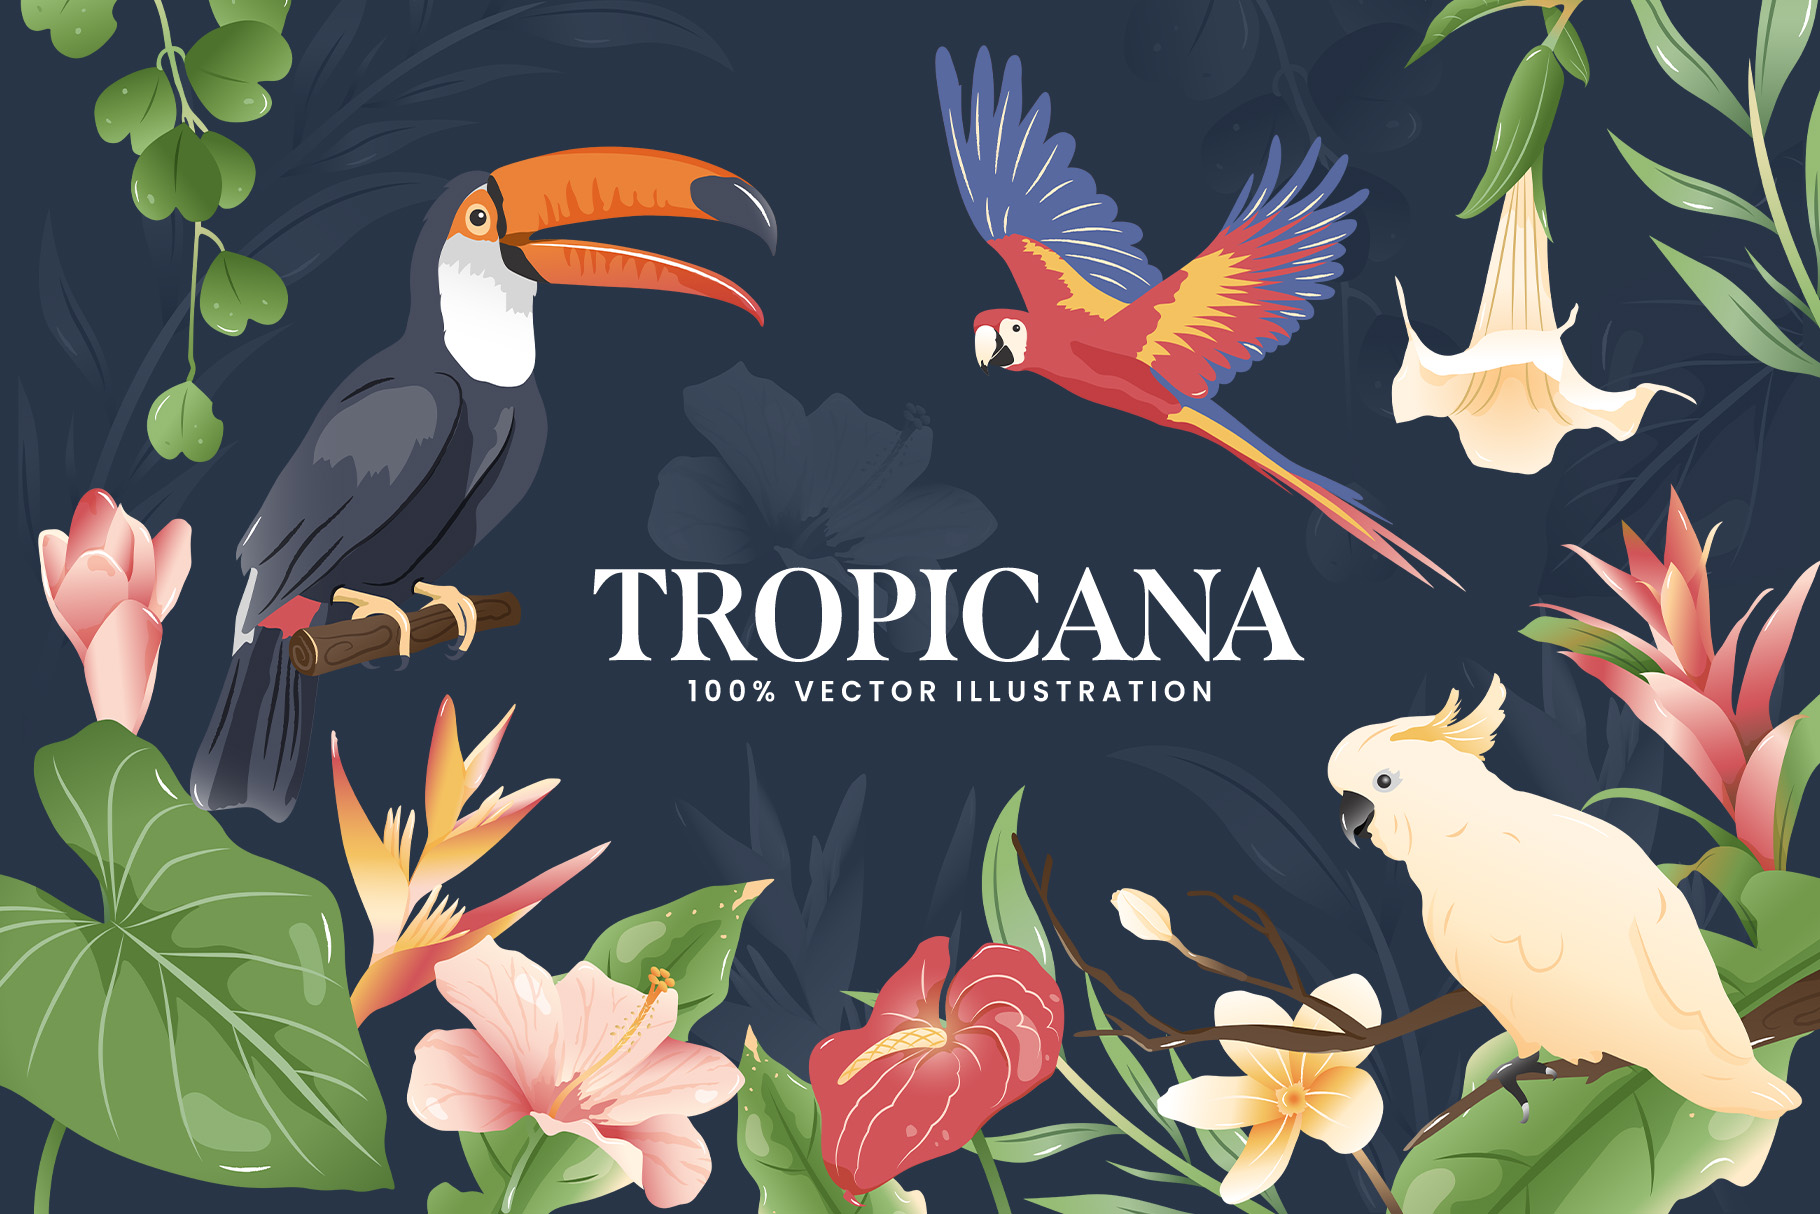 Tropical Illustrations Set (AI, EPS, PNG Format)